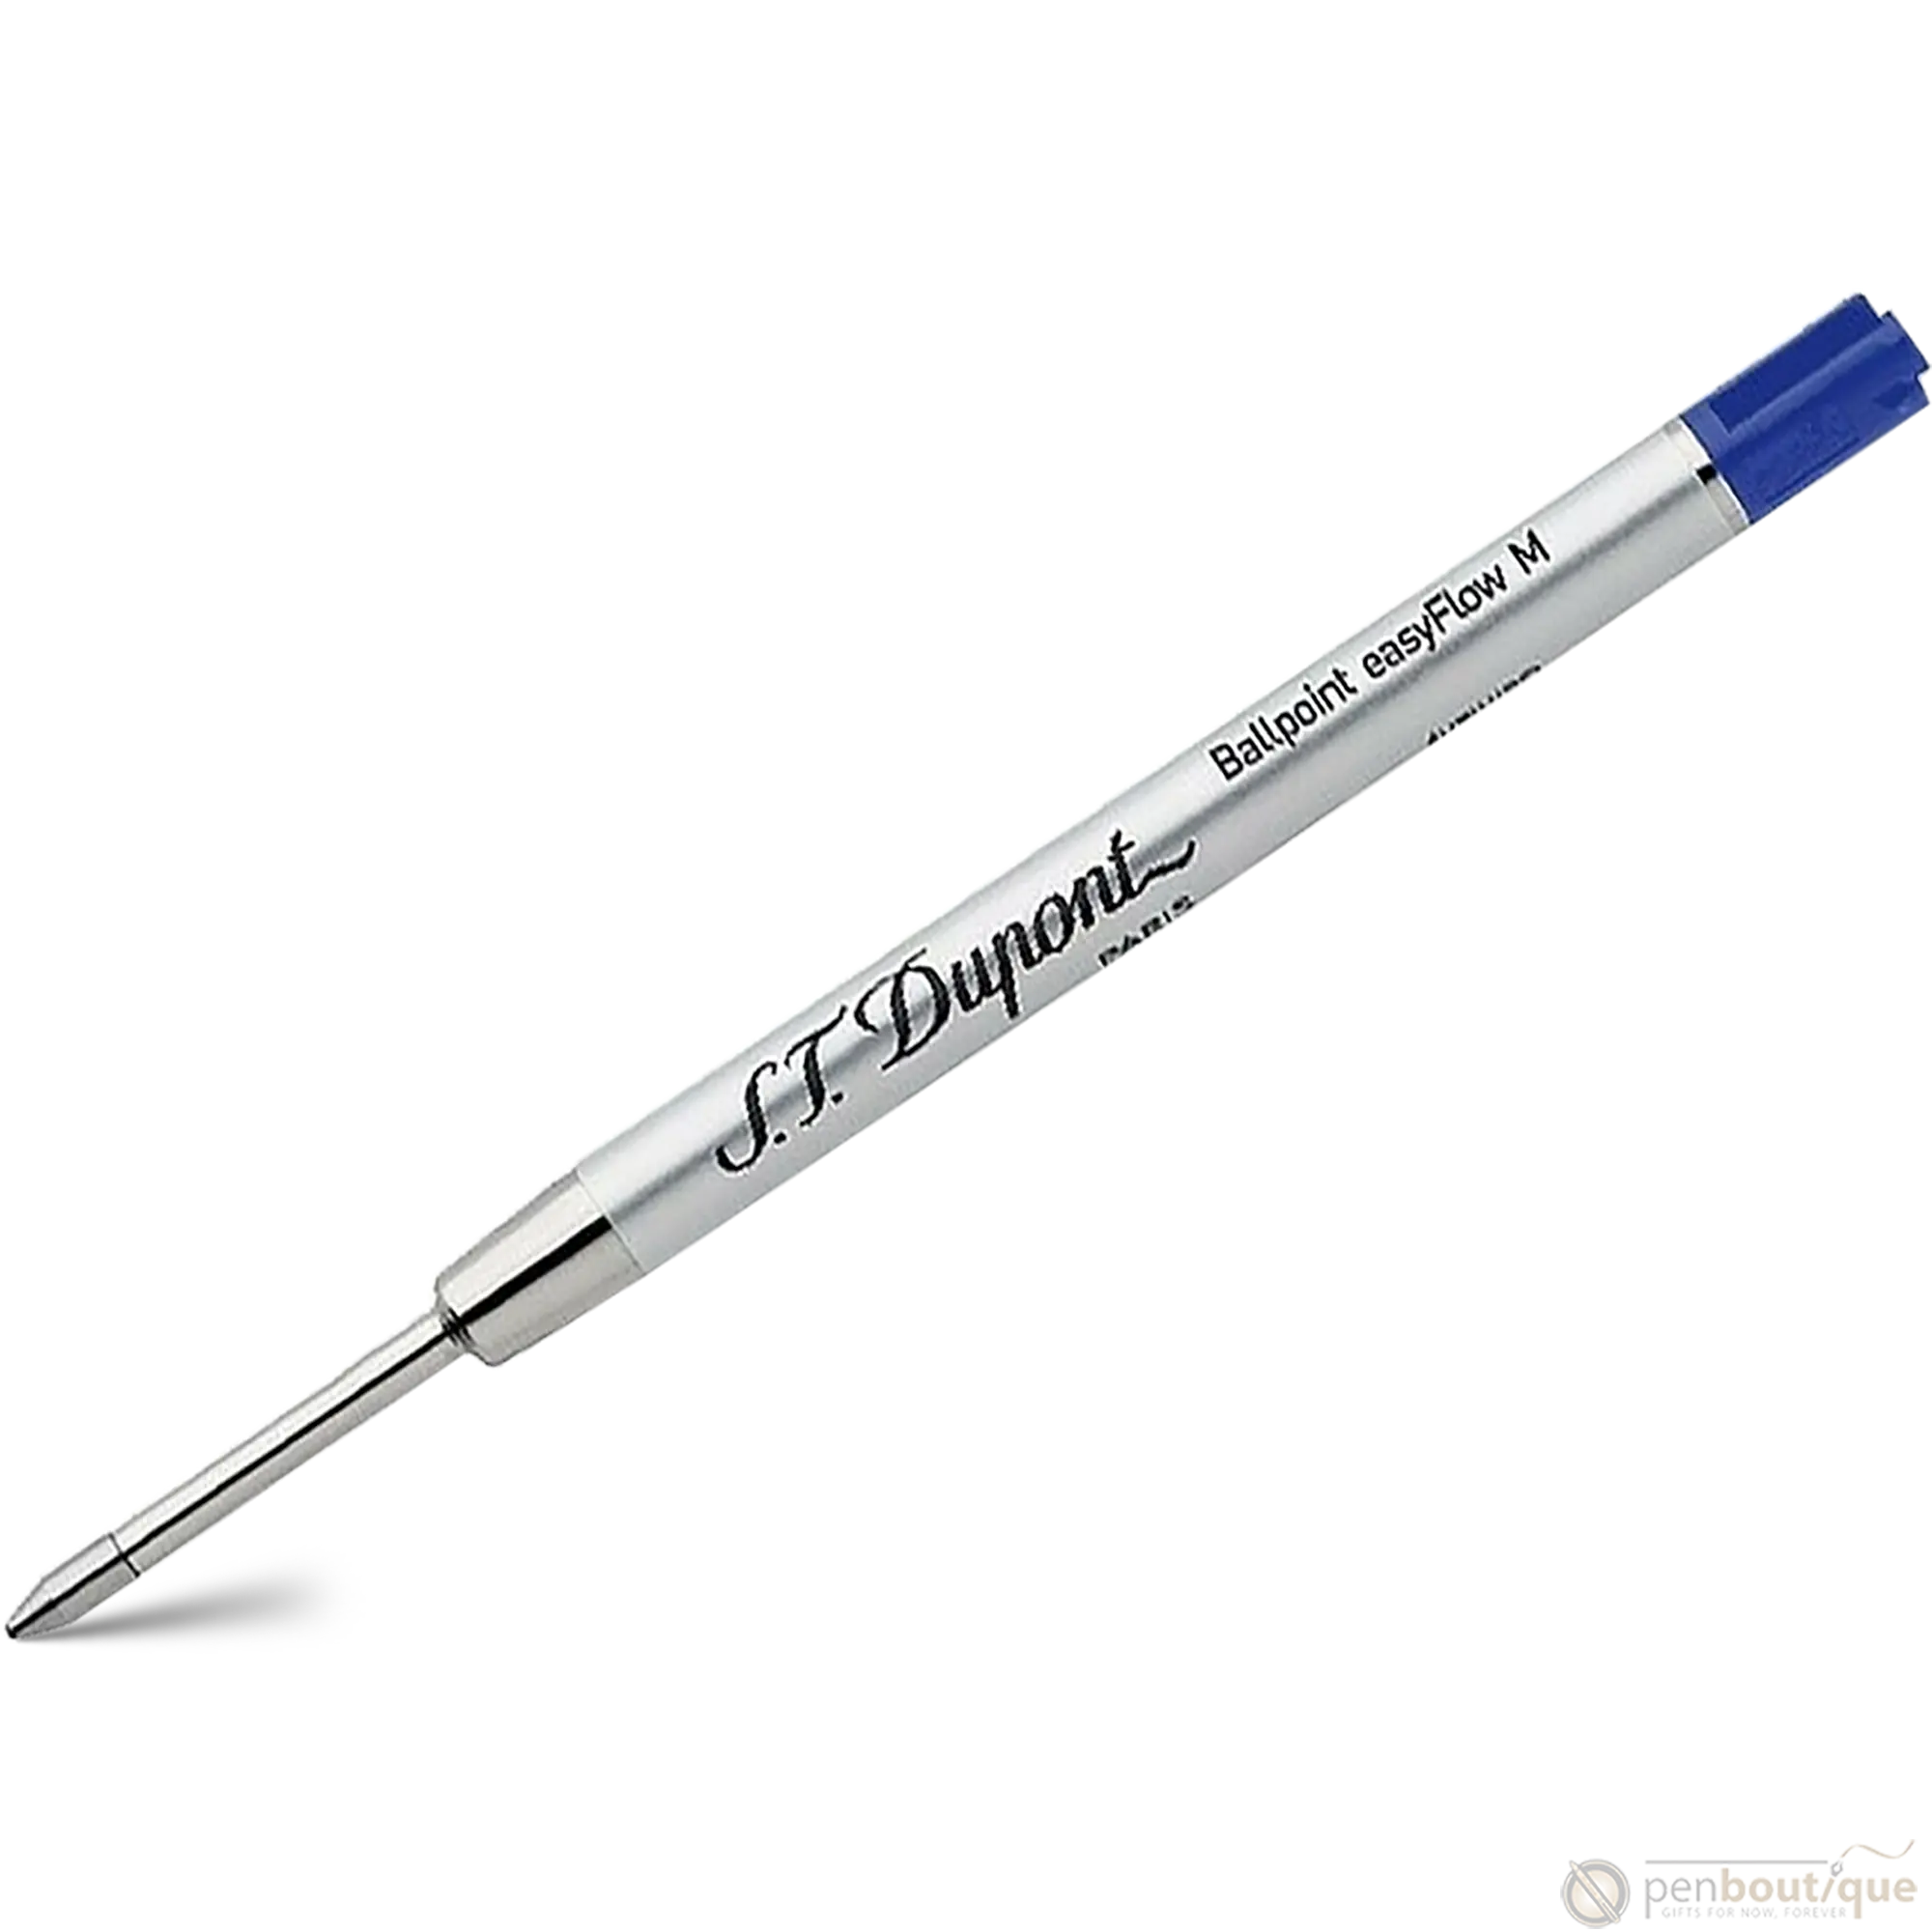 ST Dupont Ballpoint Refill - Blue - Medium-Pen Boutique Ltd